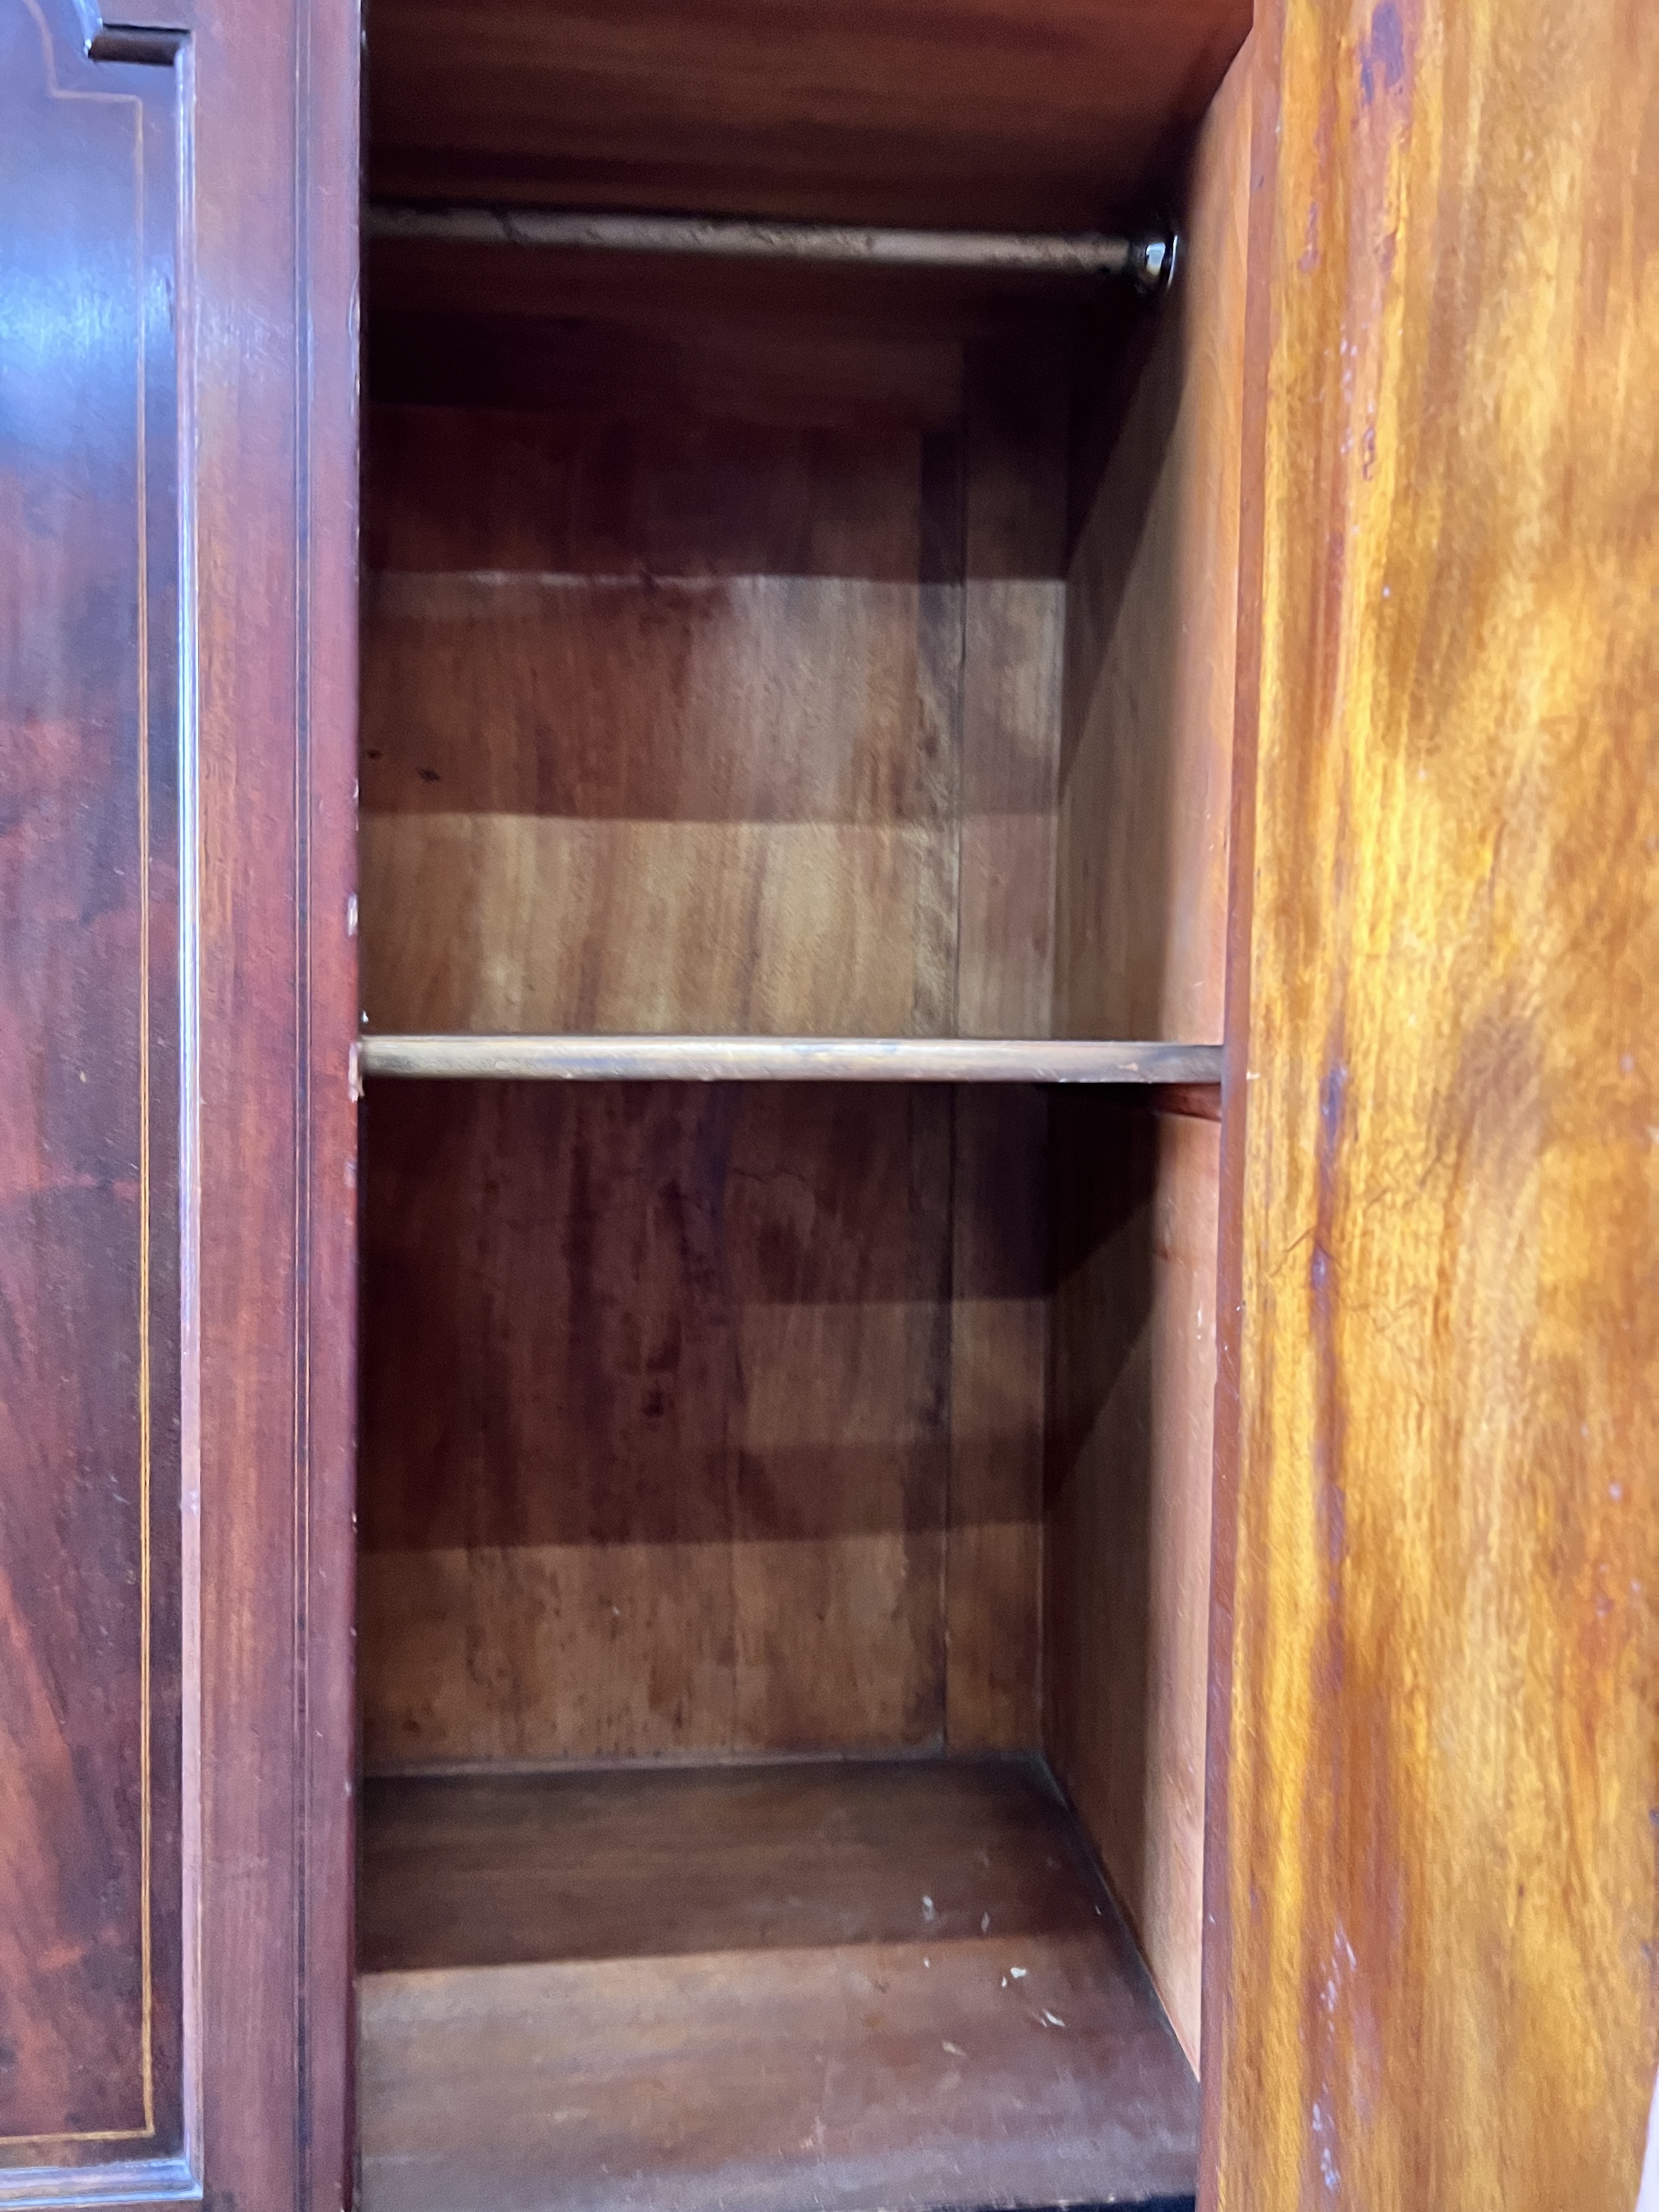 An Edwardian satinwood banded mahogany mirrored wardrobe, width 190cm, depth 56cm, height 212cm